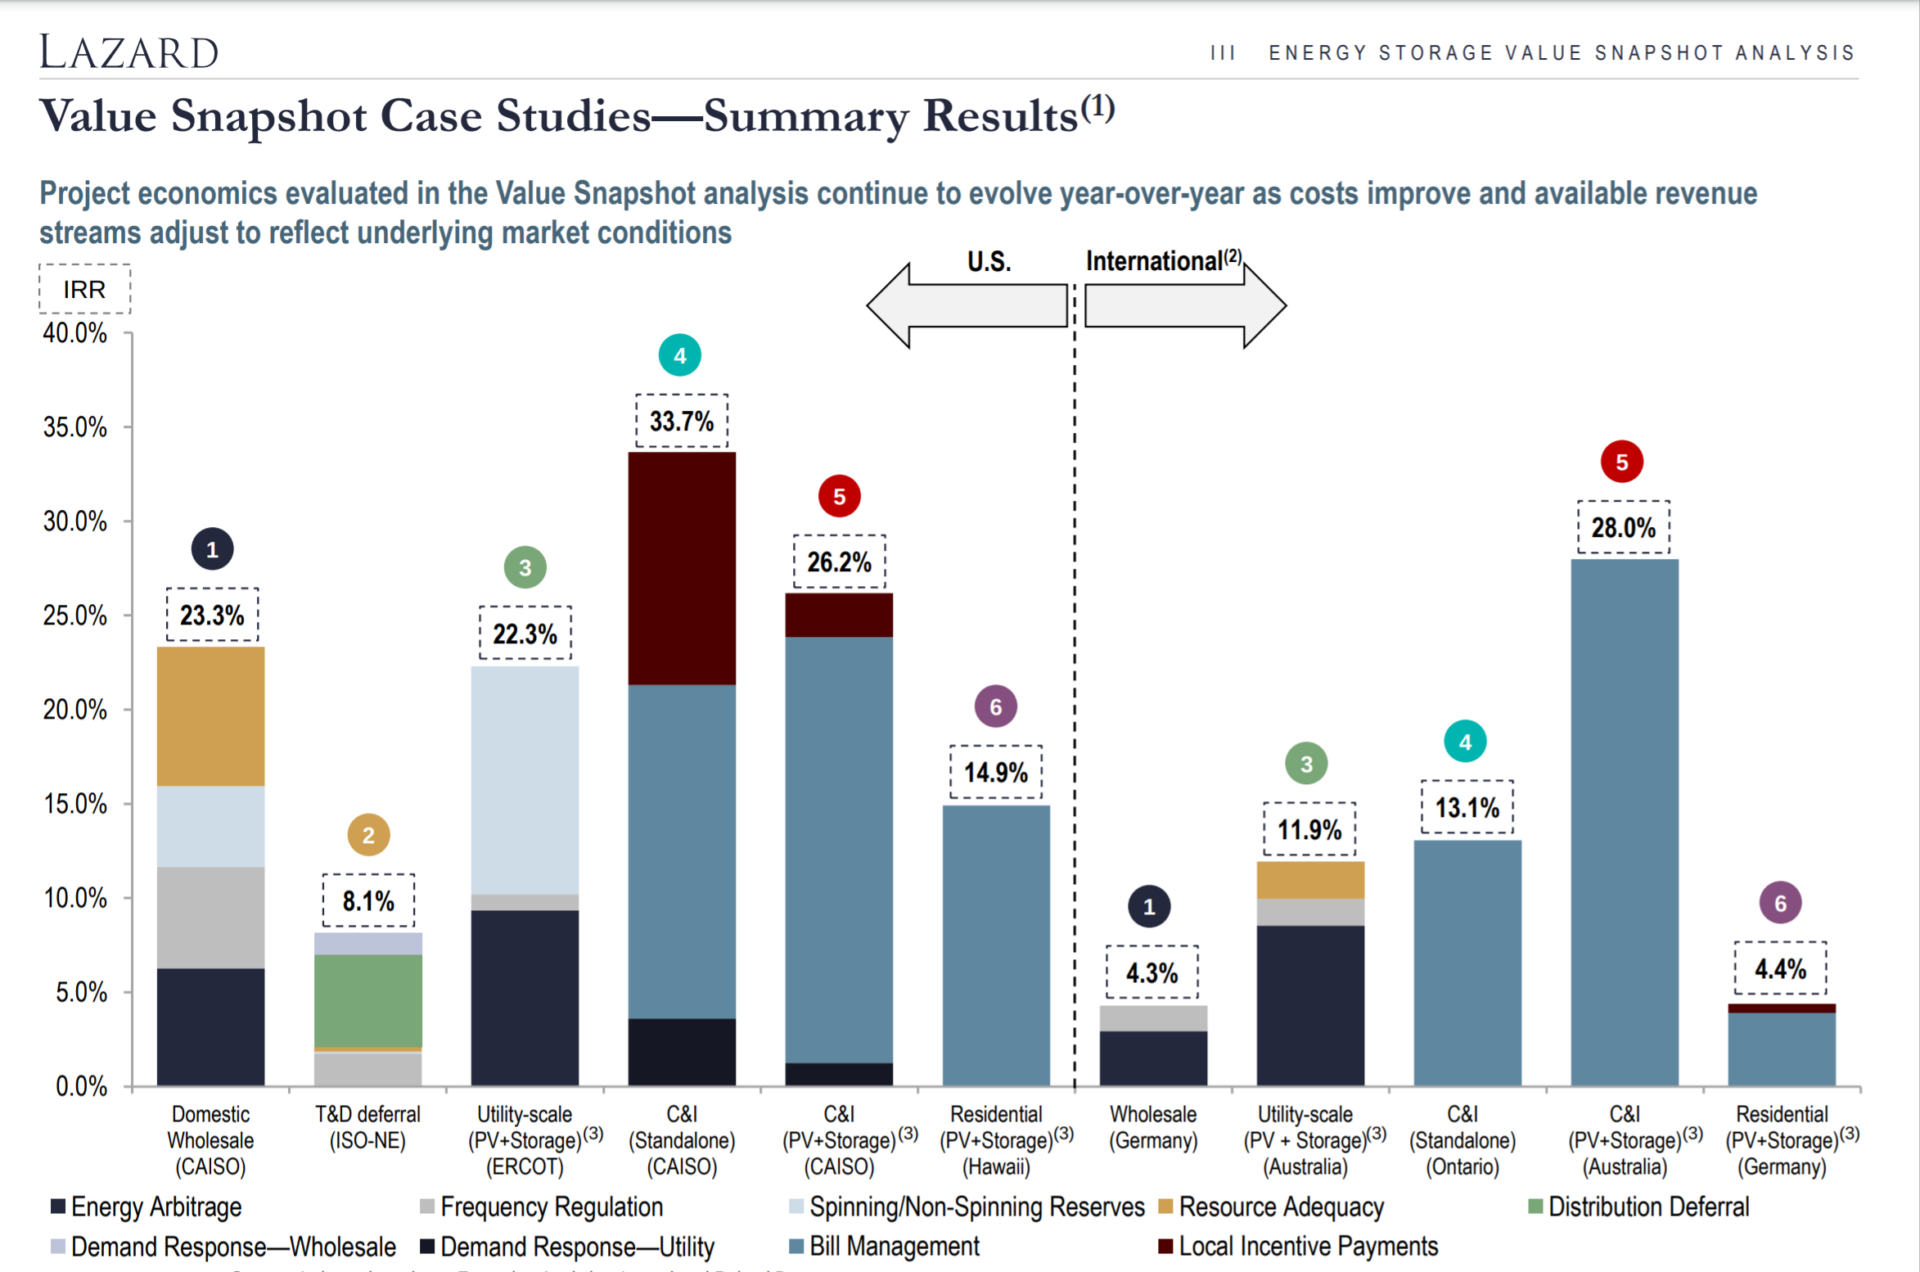 value snapshot case studies - summary results